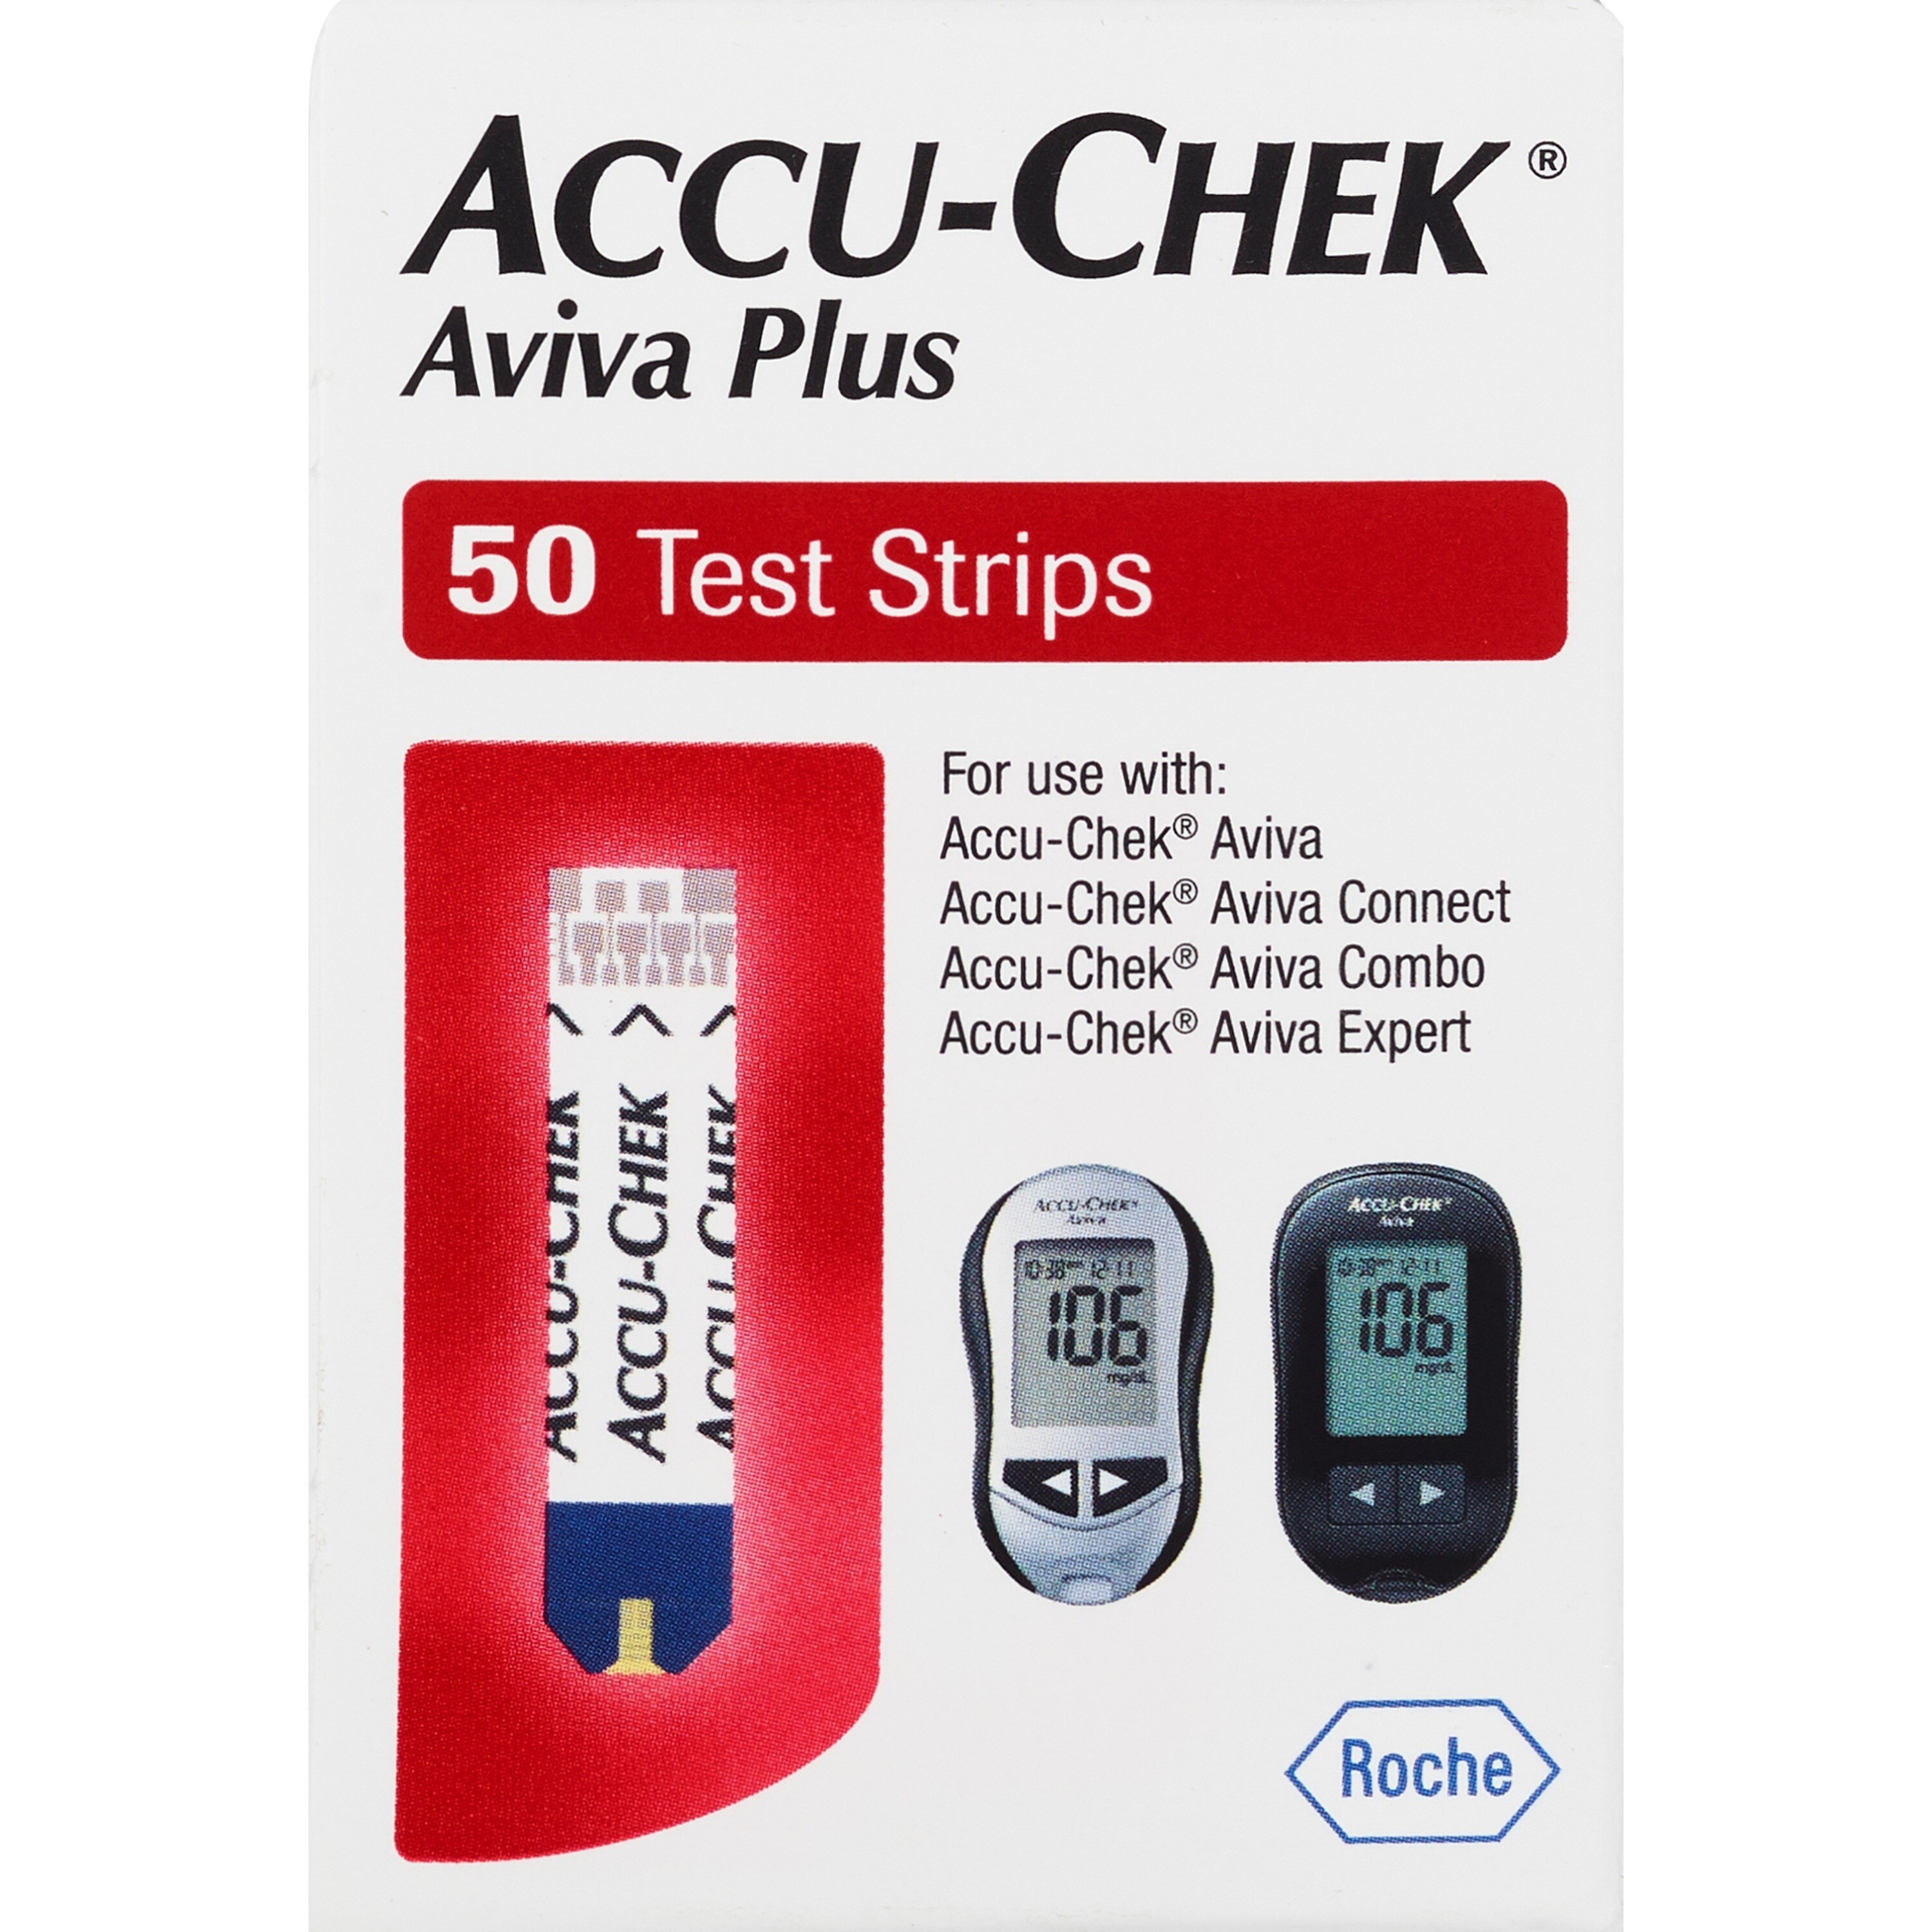 Accu-Chek Aviva Plus Test Strips